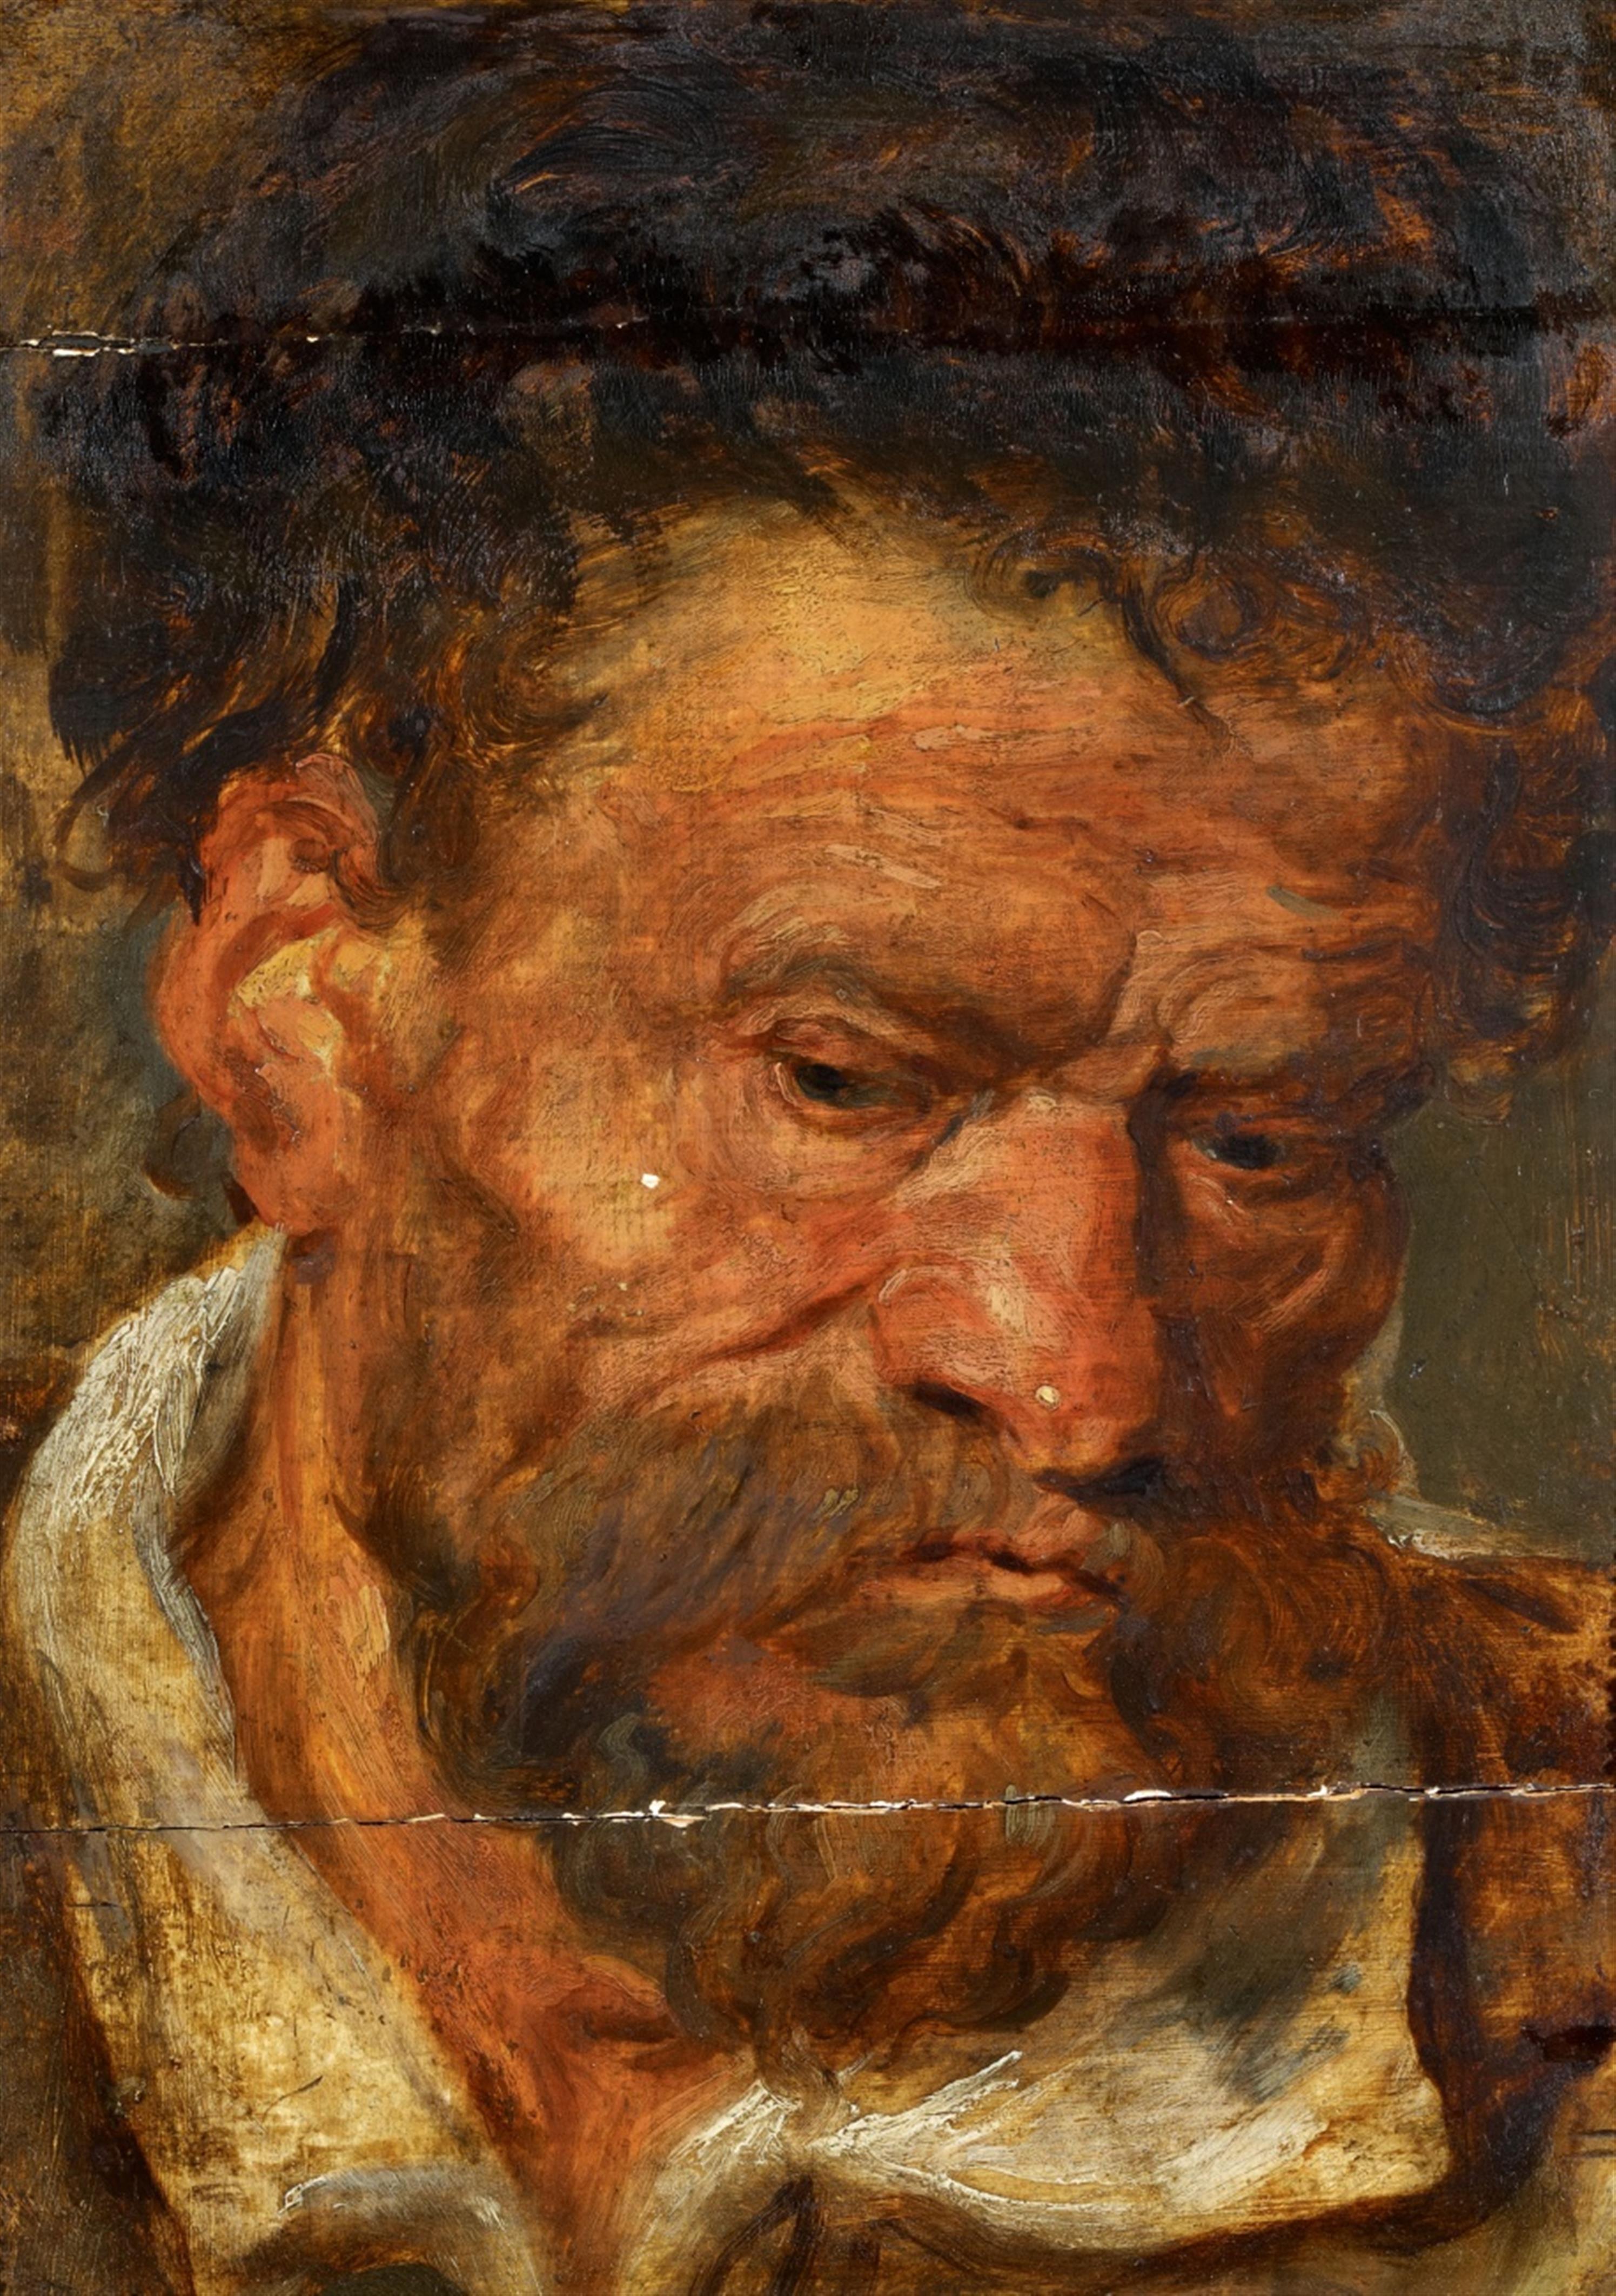 Flemish School, 17th century - Head of a Bearded Man (Oil Sketch)